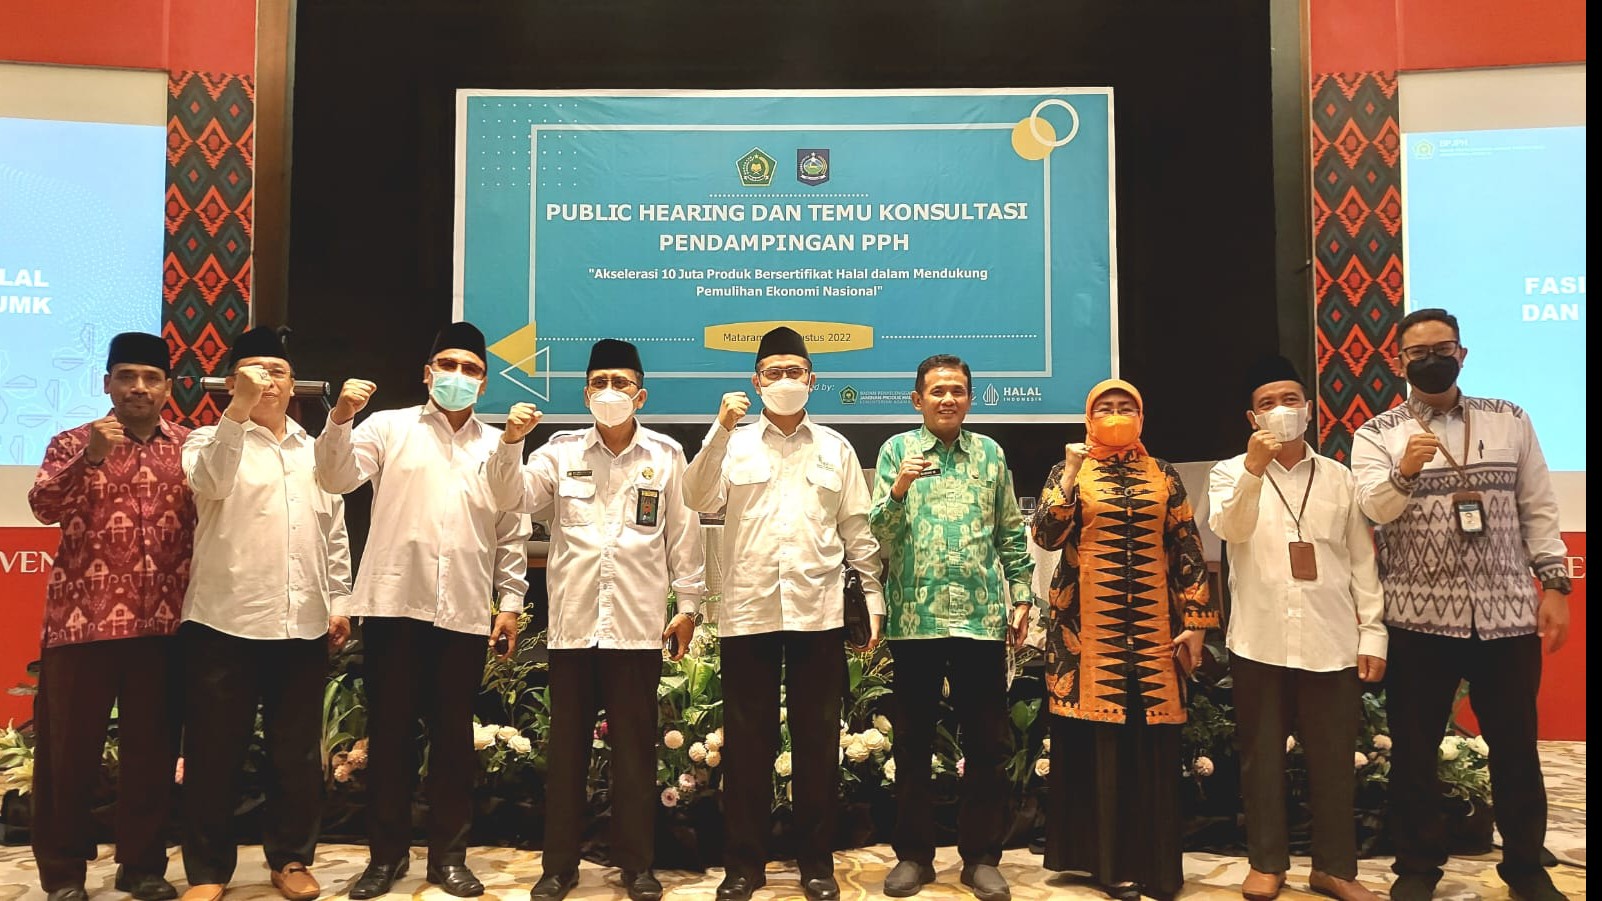 Public Hearing dan Temu Konsultasi Pendamping Proses Produk Halal (PPH) di Senggigi, Mataram, Selasa (16/8/2022)